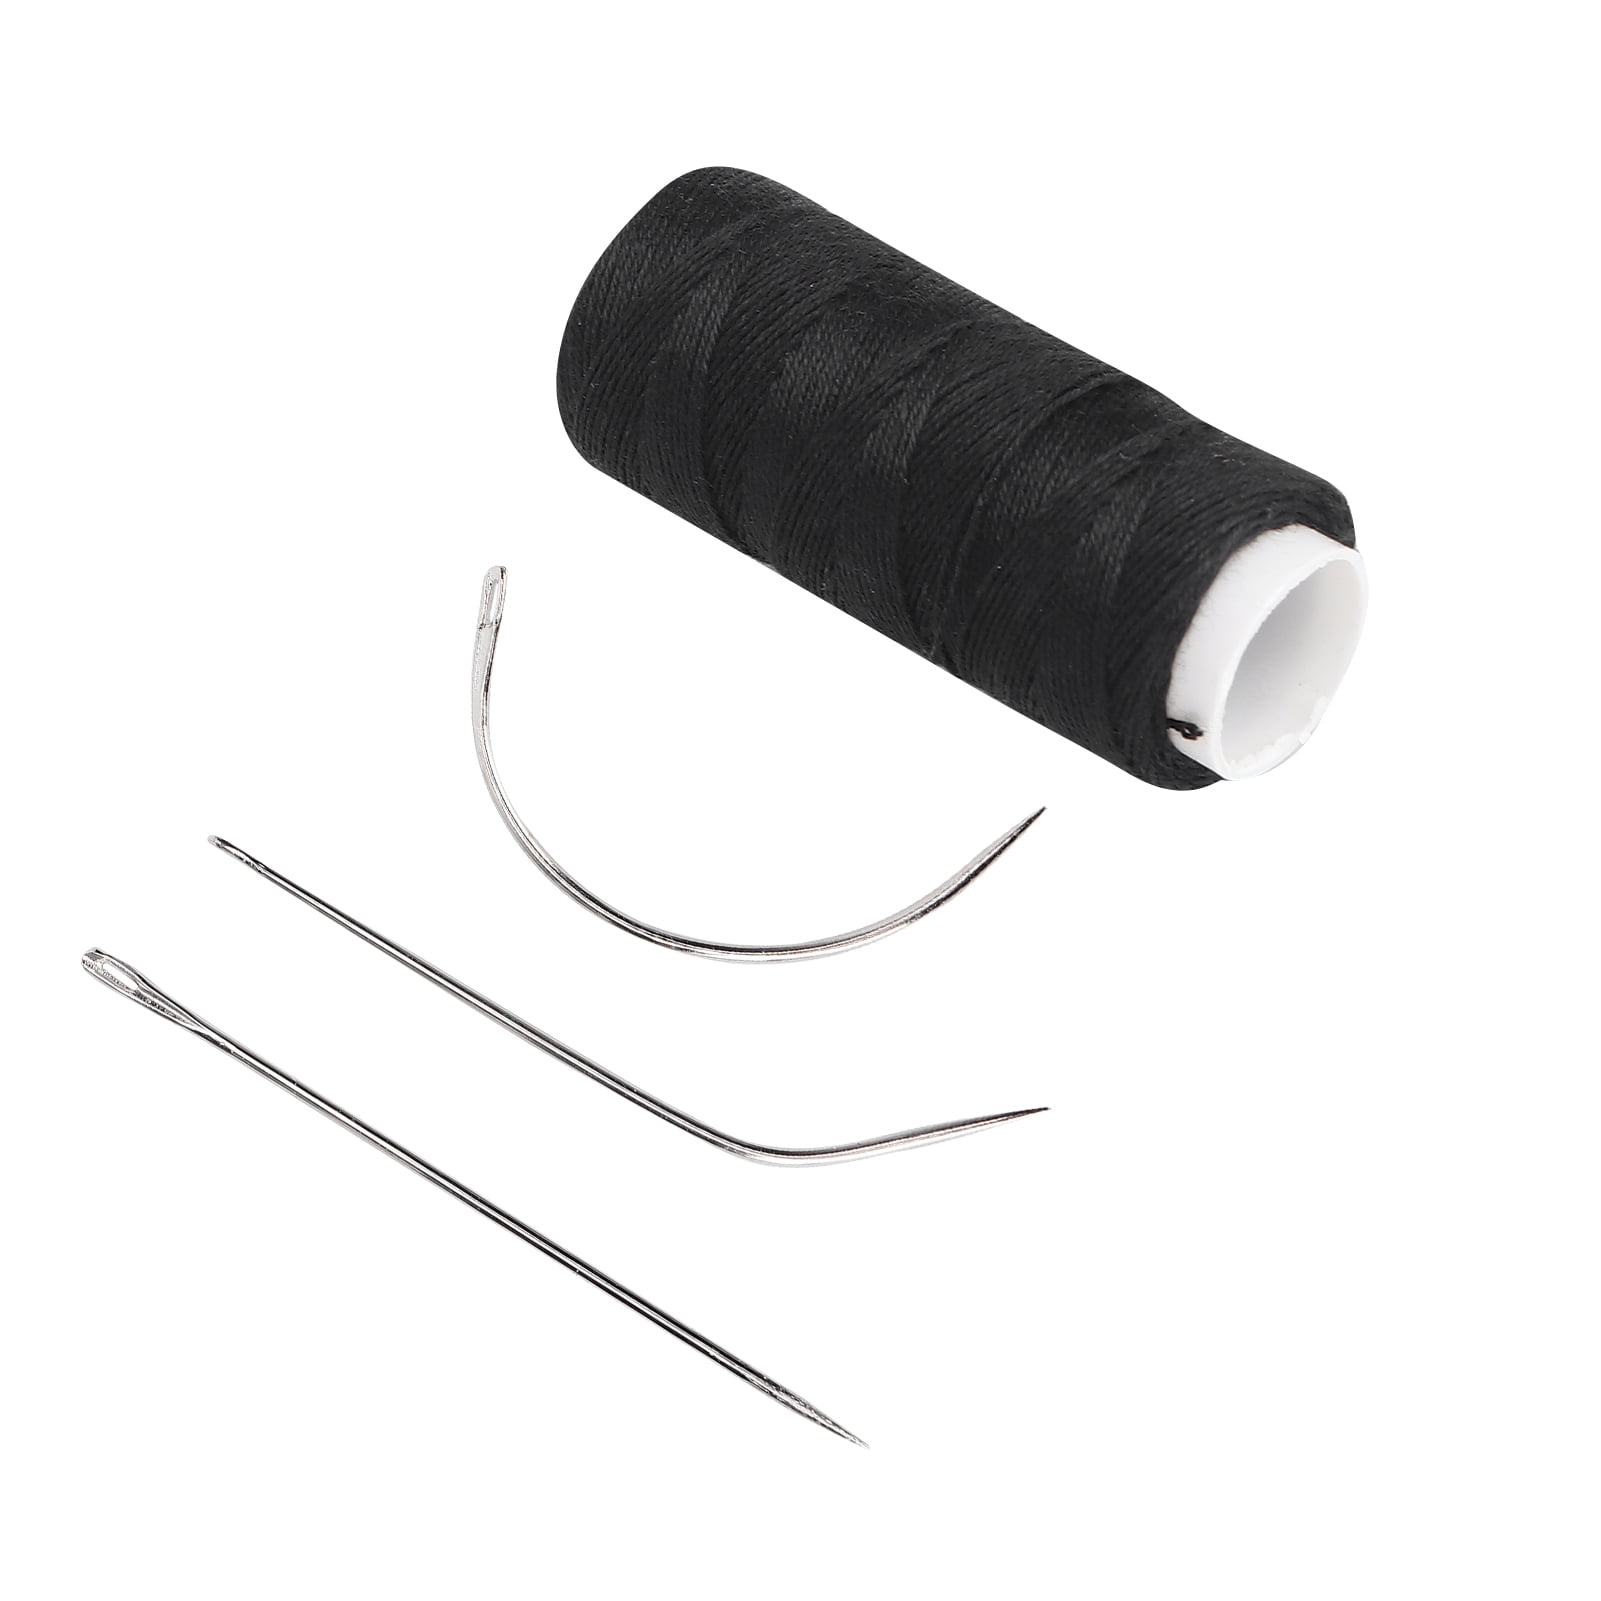 US$ 6.99 - Ryalan Weaving Needle Combo Deal Black Thread with